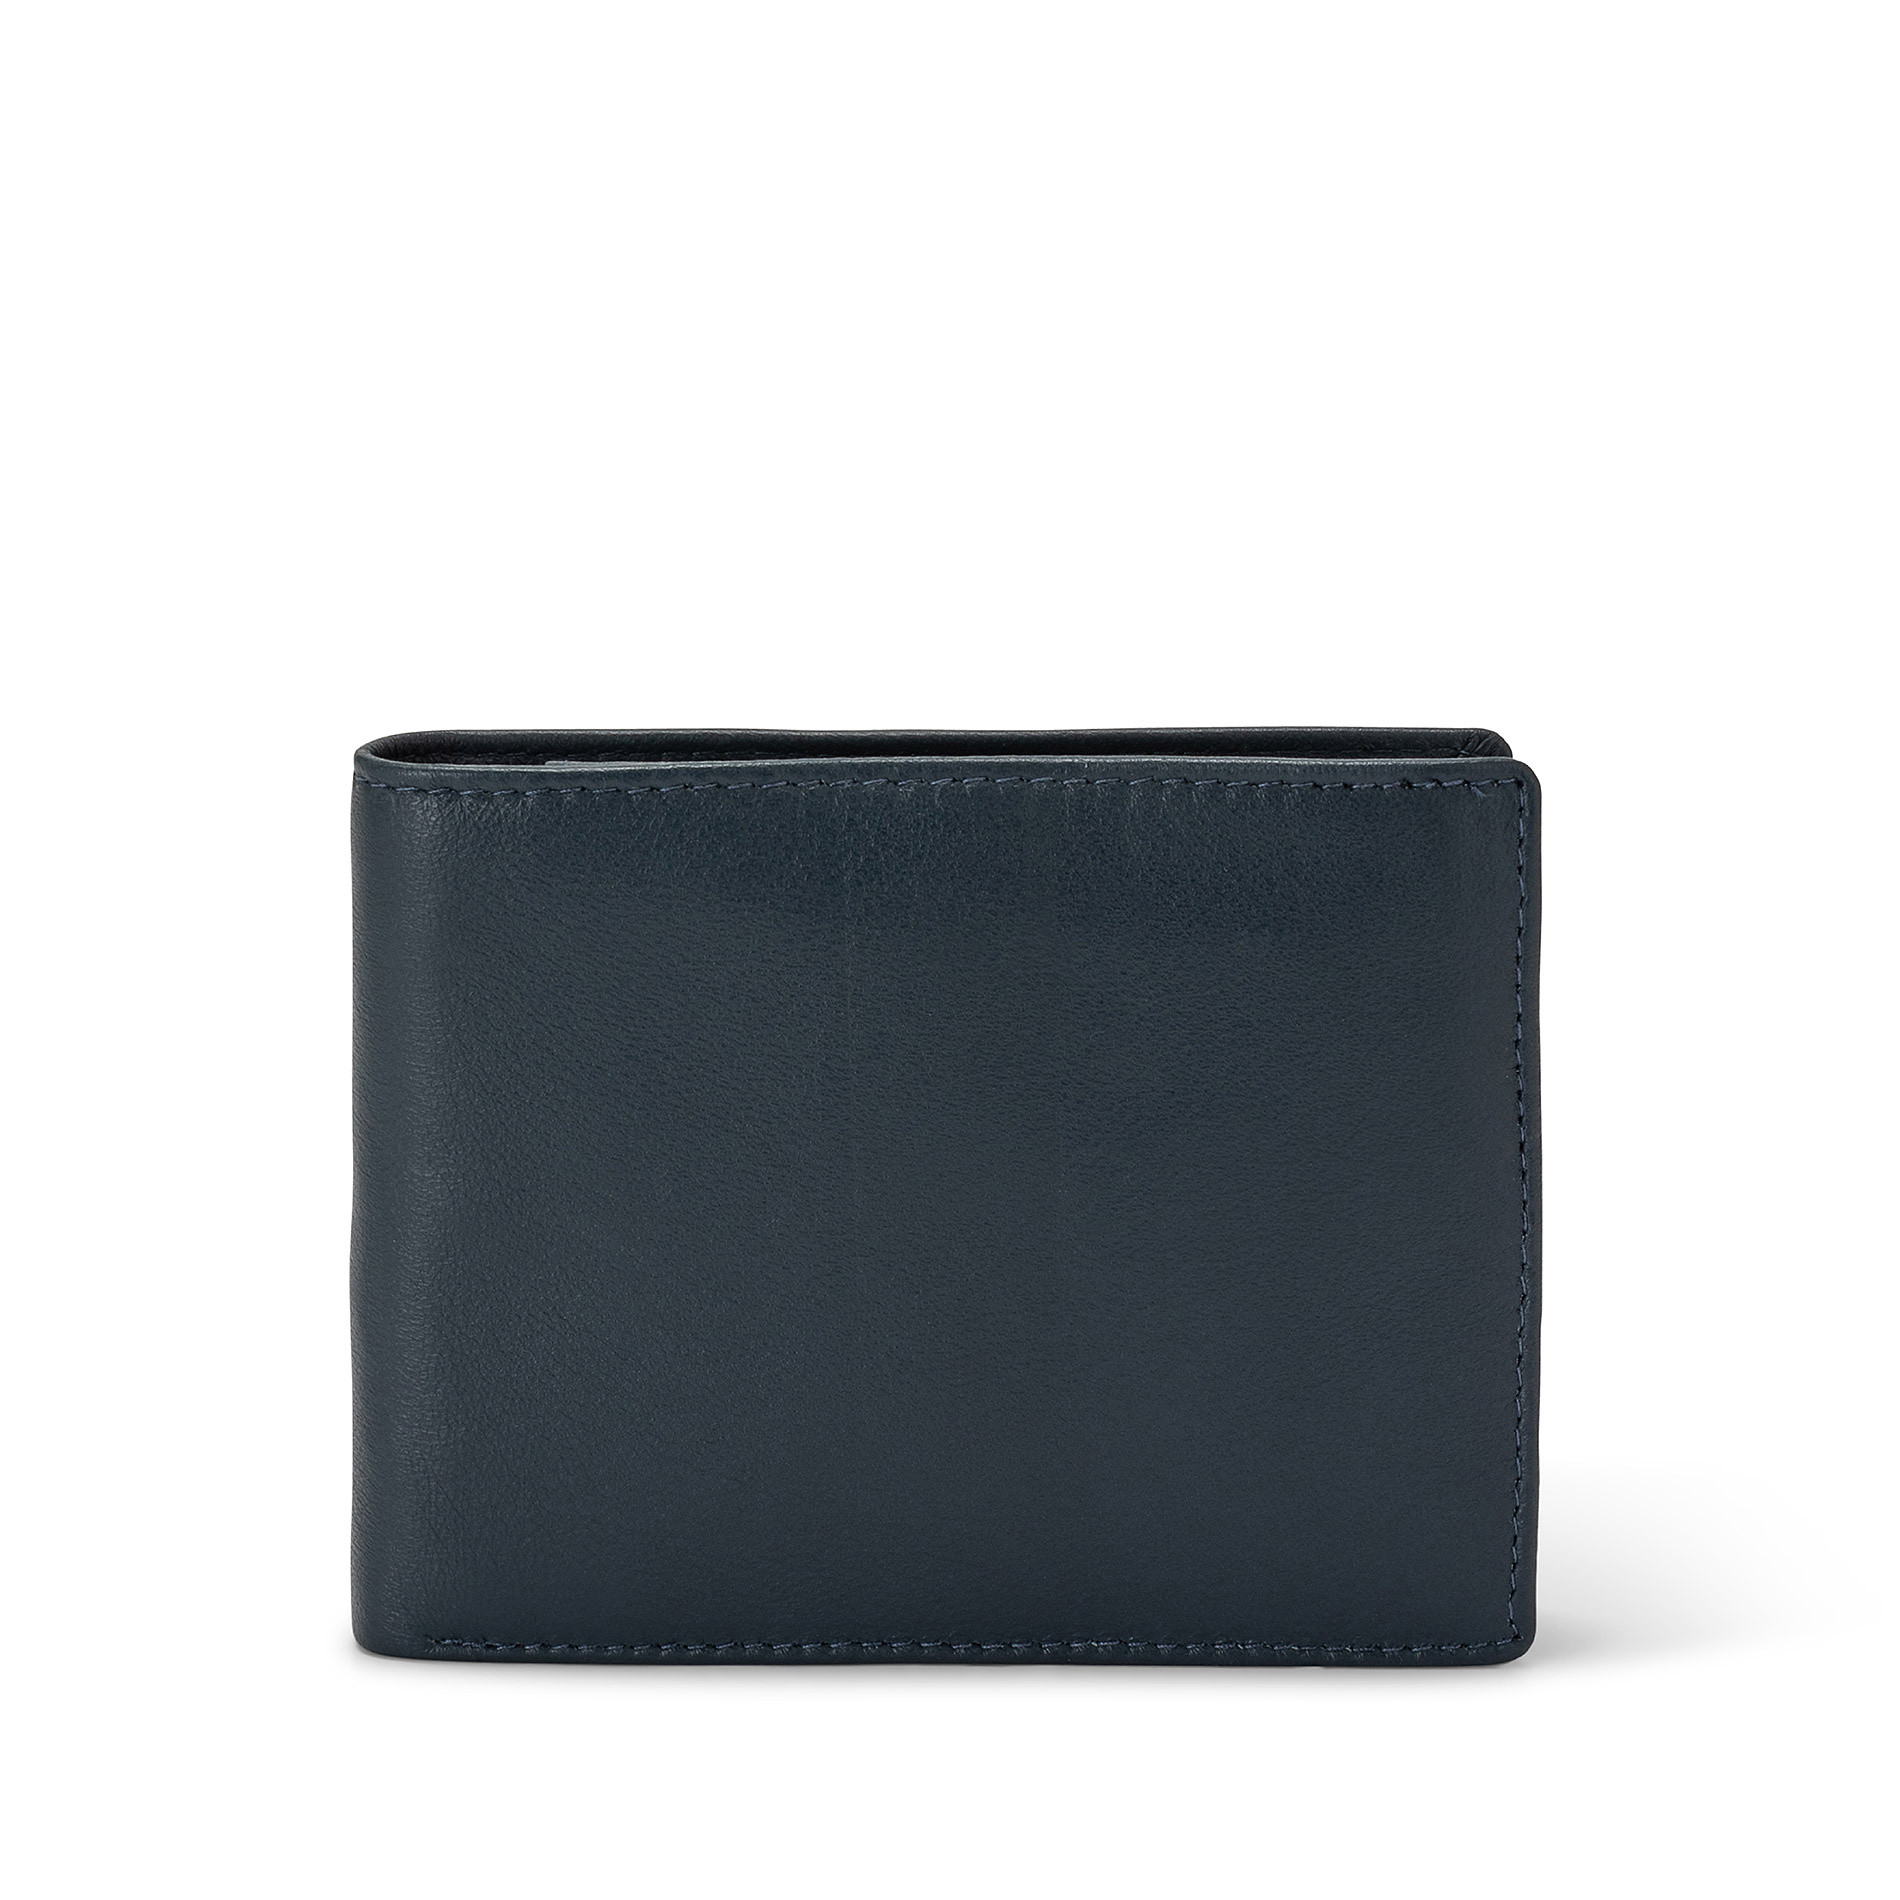 Luca D'Altieri leather wallet, Dark Blue, large image number 0